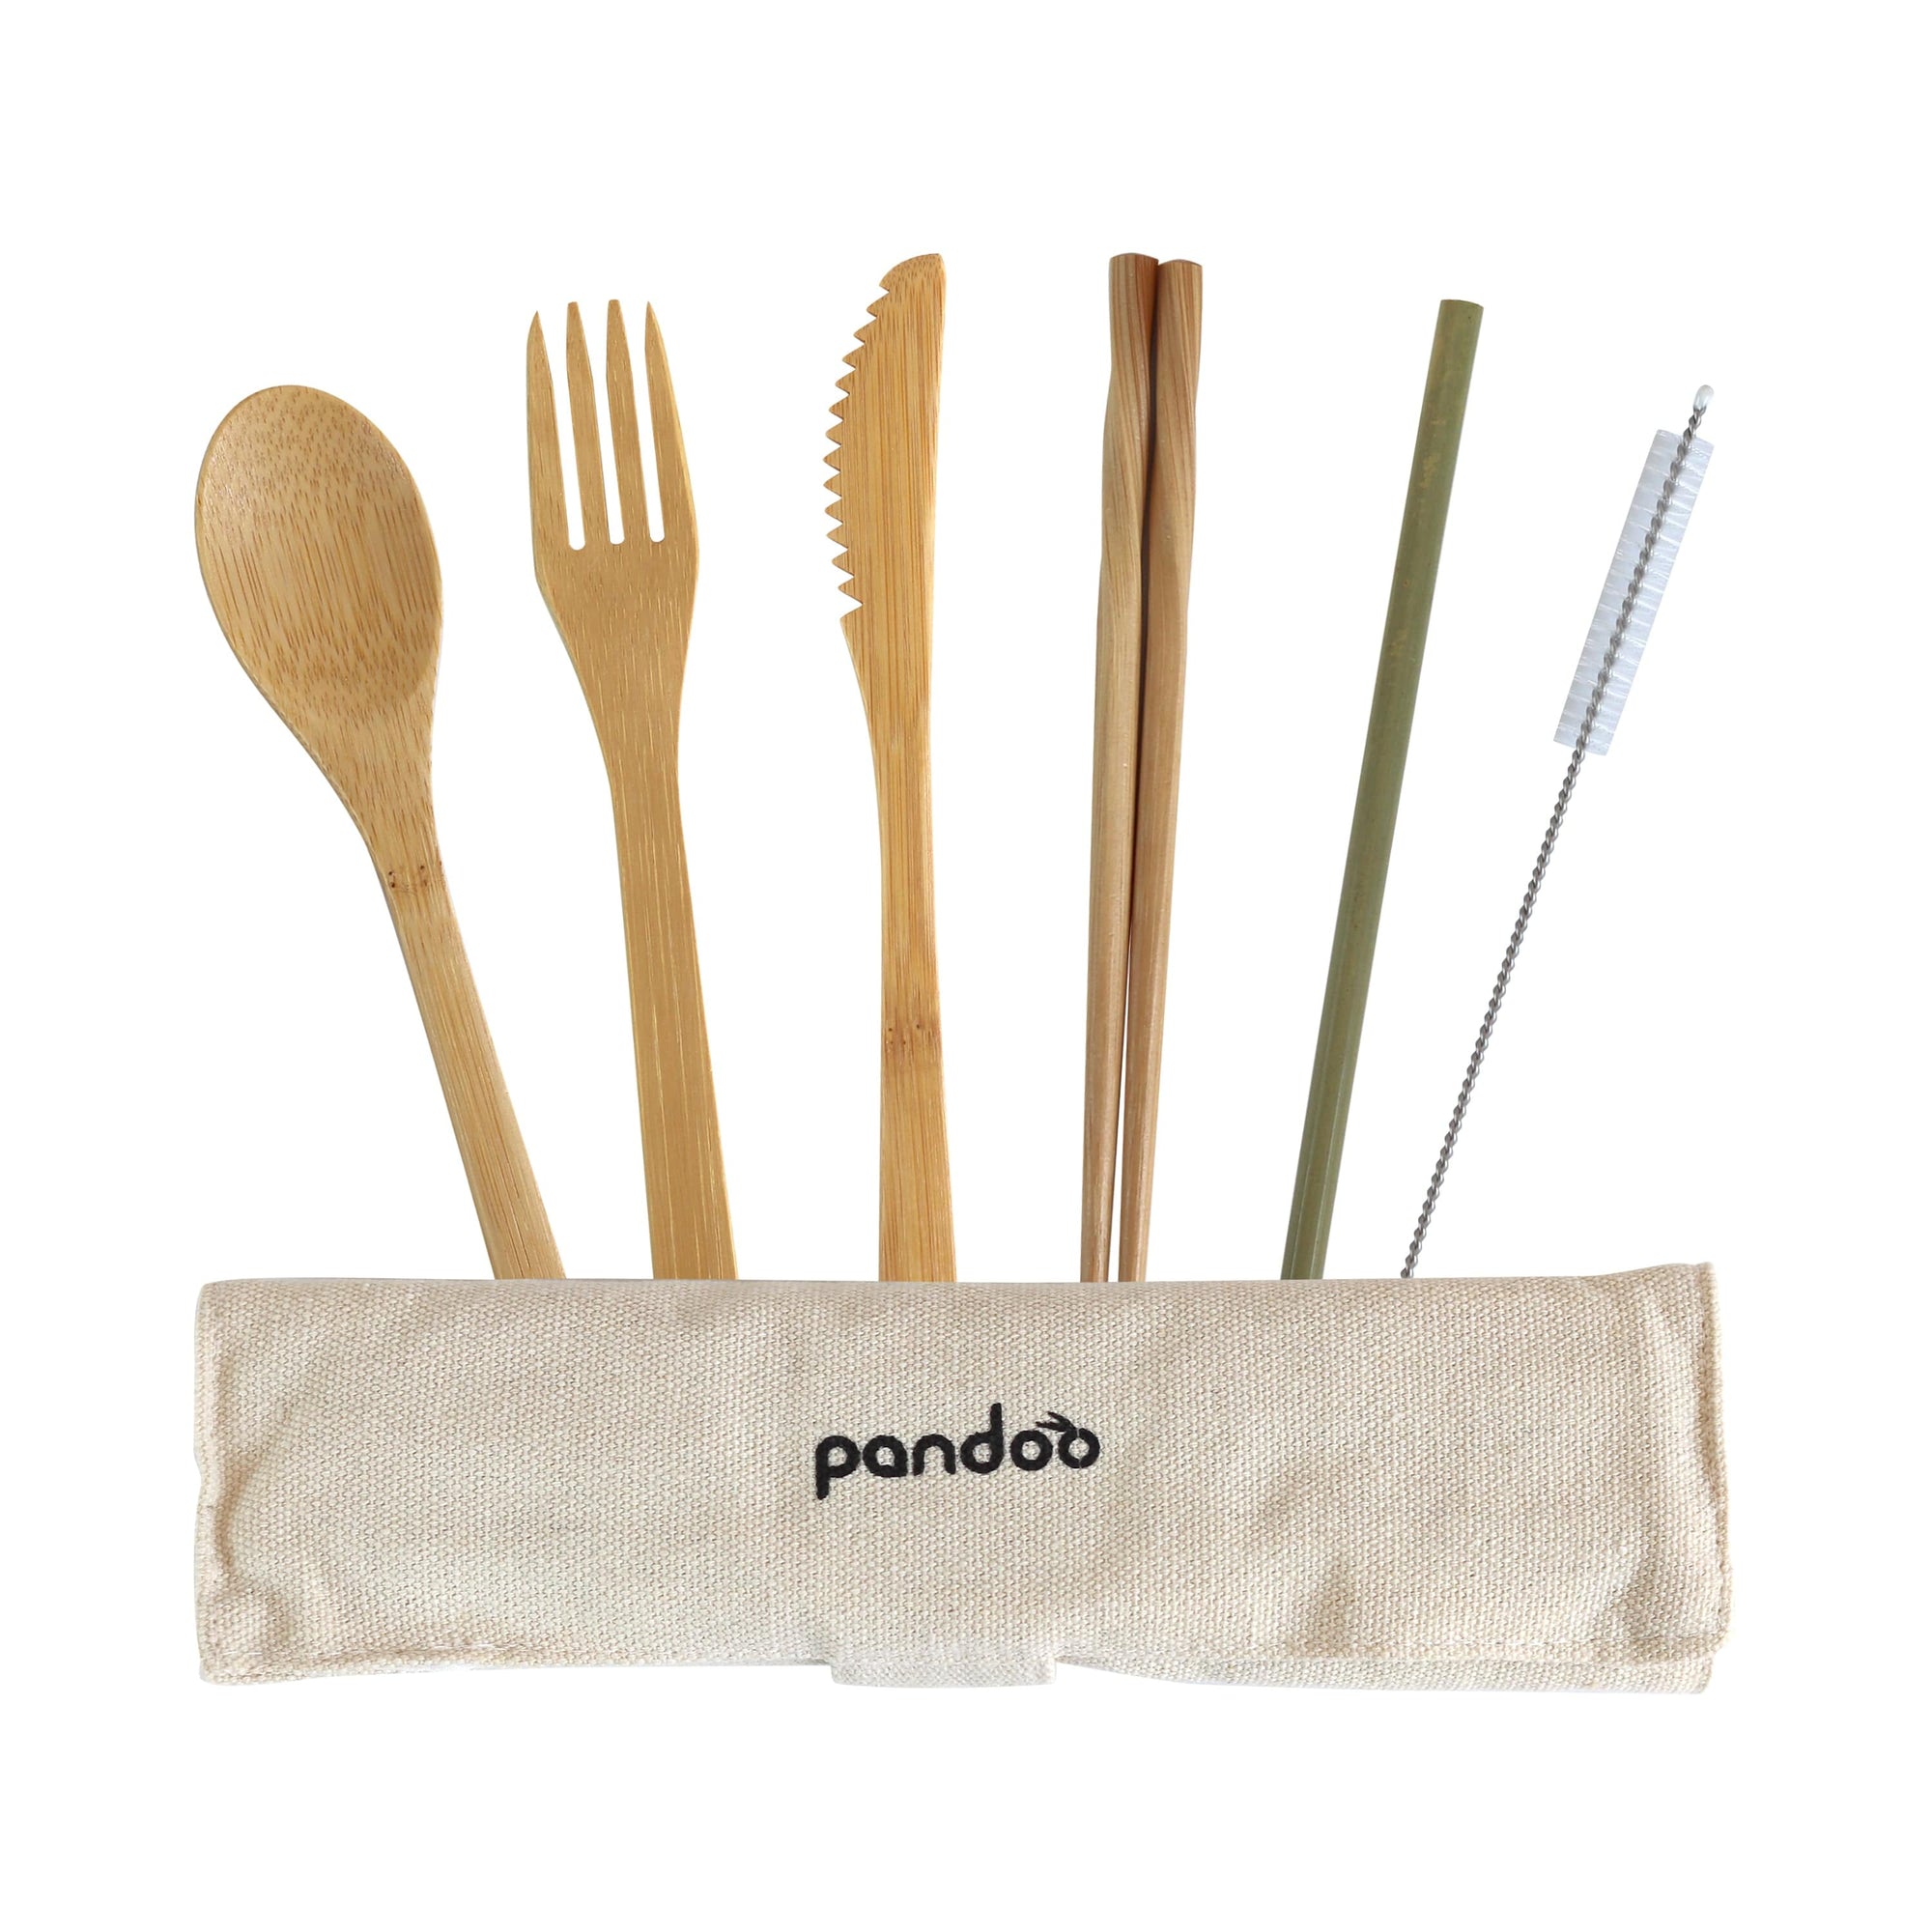 pandoo Bambus Picknick und Reise Besteck-Set